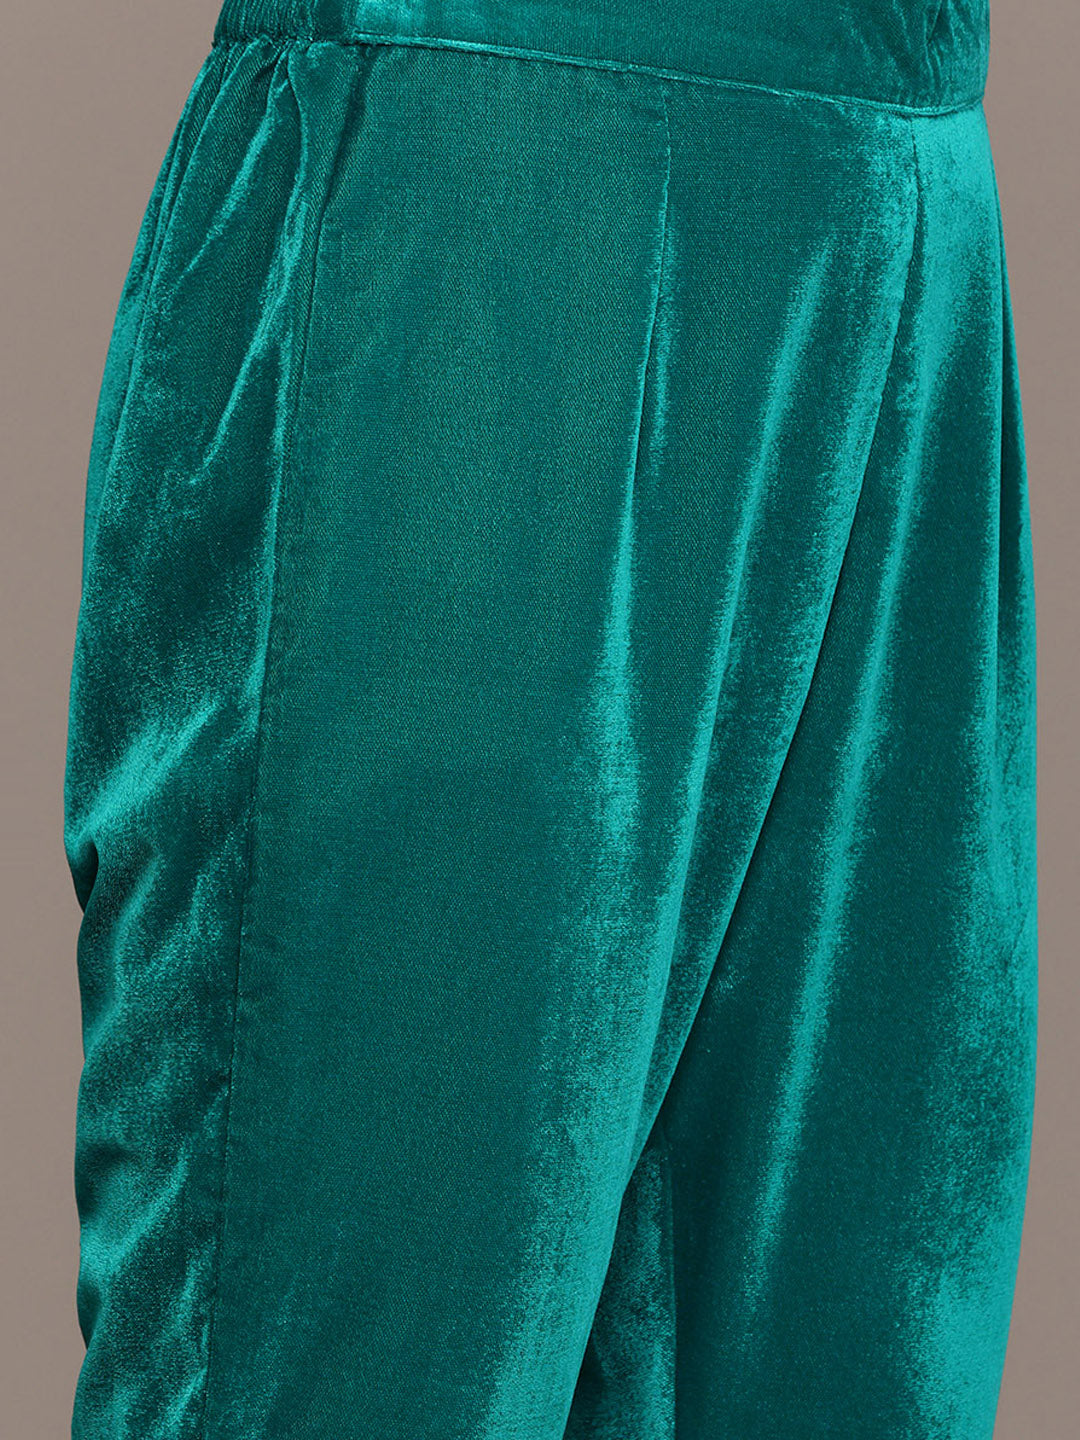 Women's Green Velvet Straight Kurta, Pant And Dupatta Set - Ziyaa